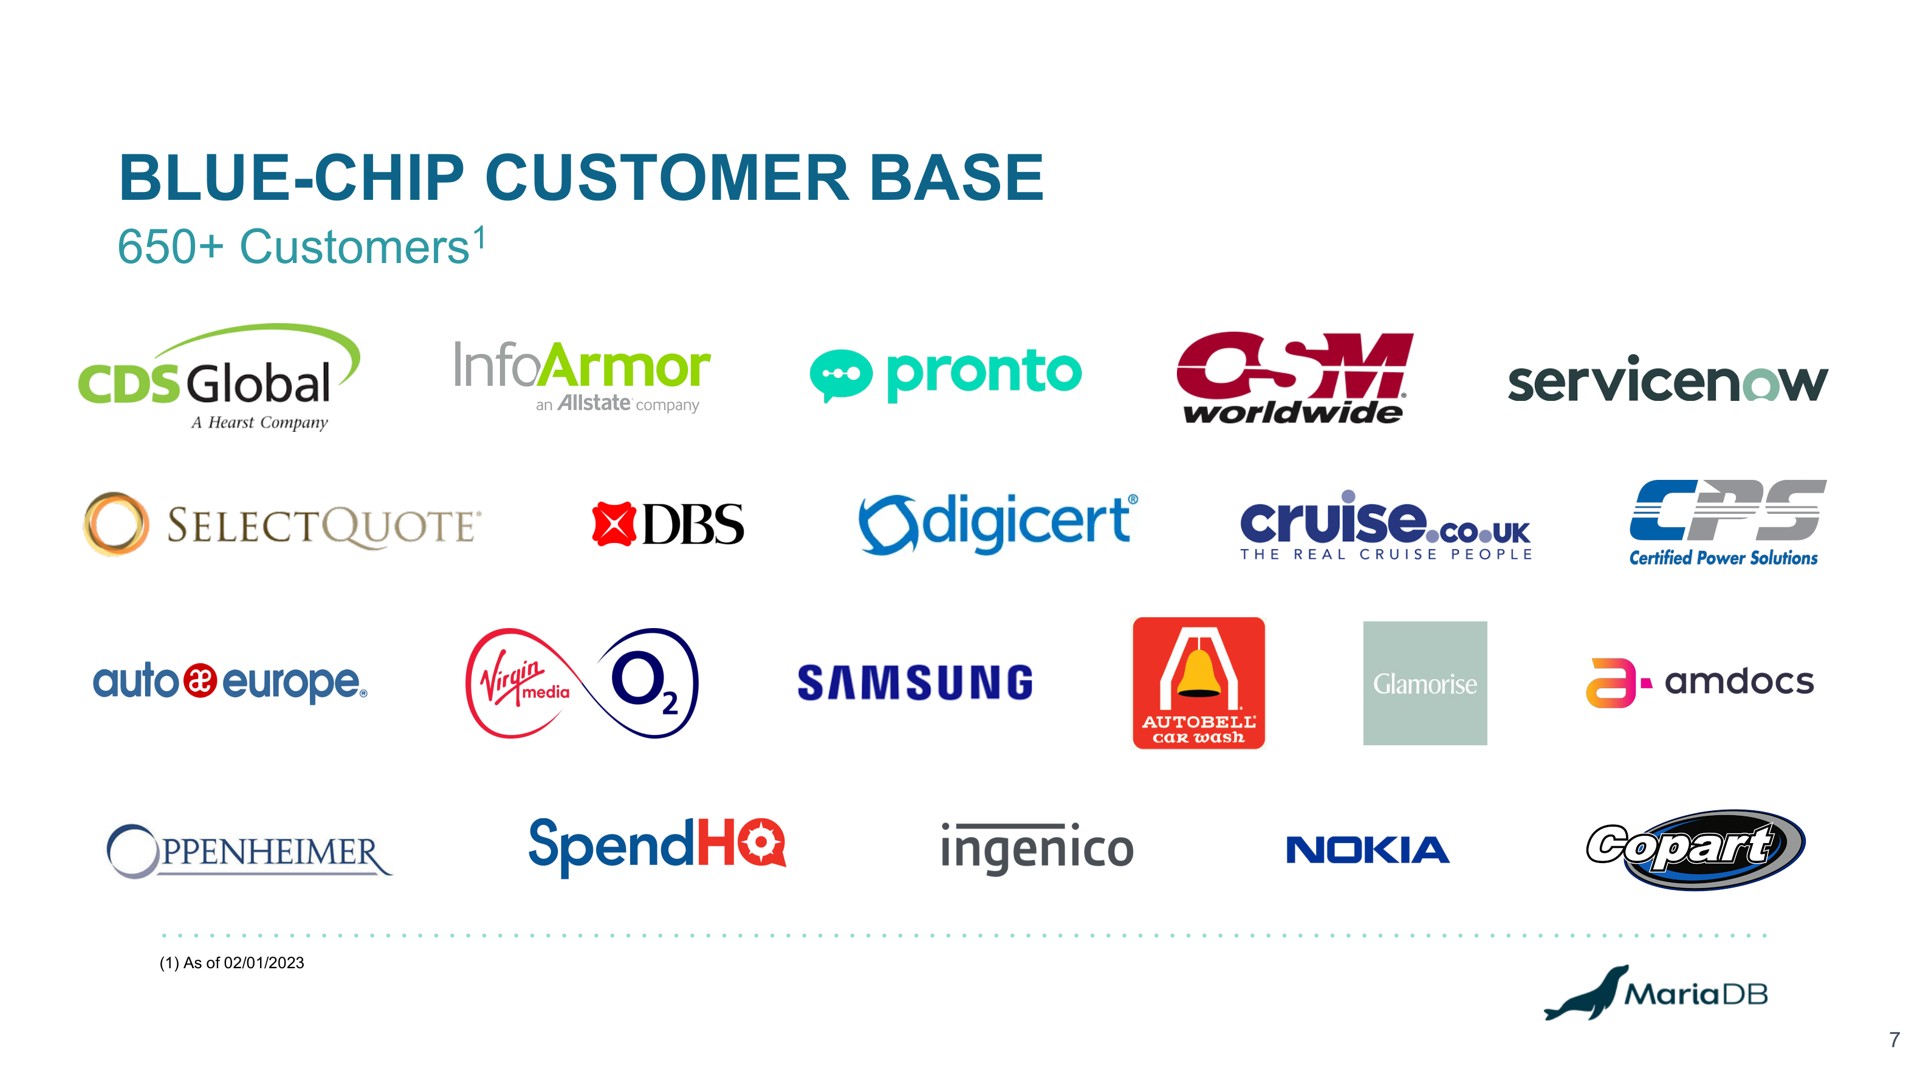 blue chip customer base pronto as | MariaDB